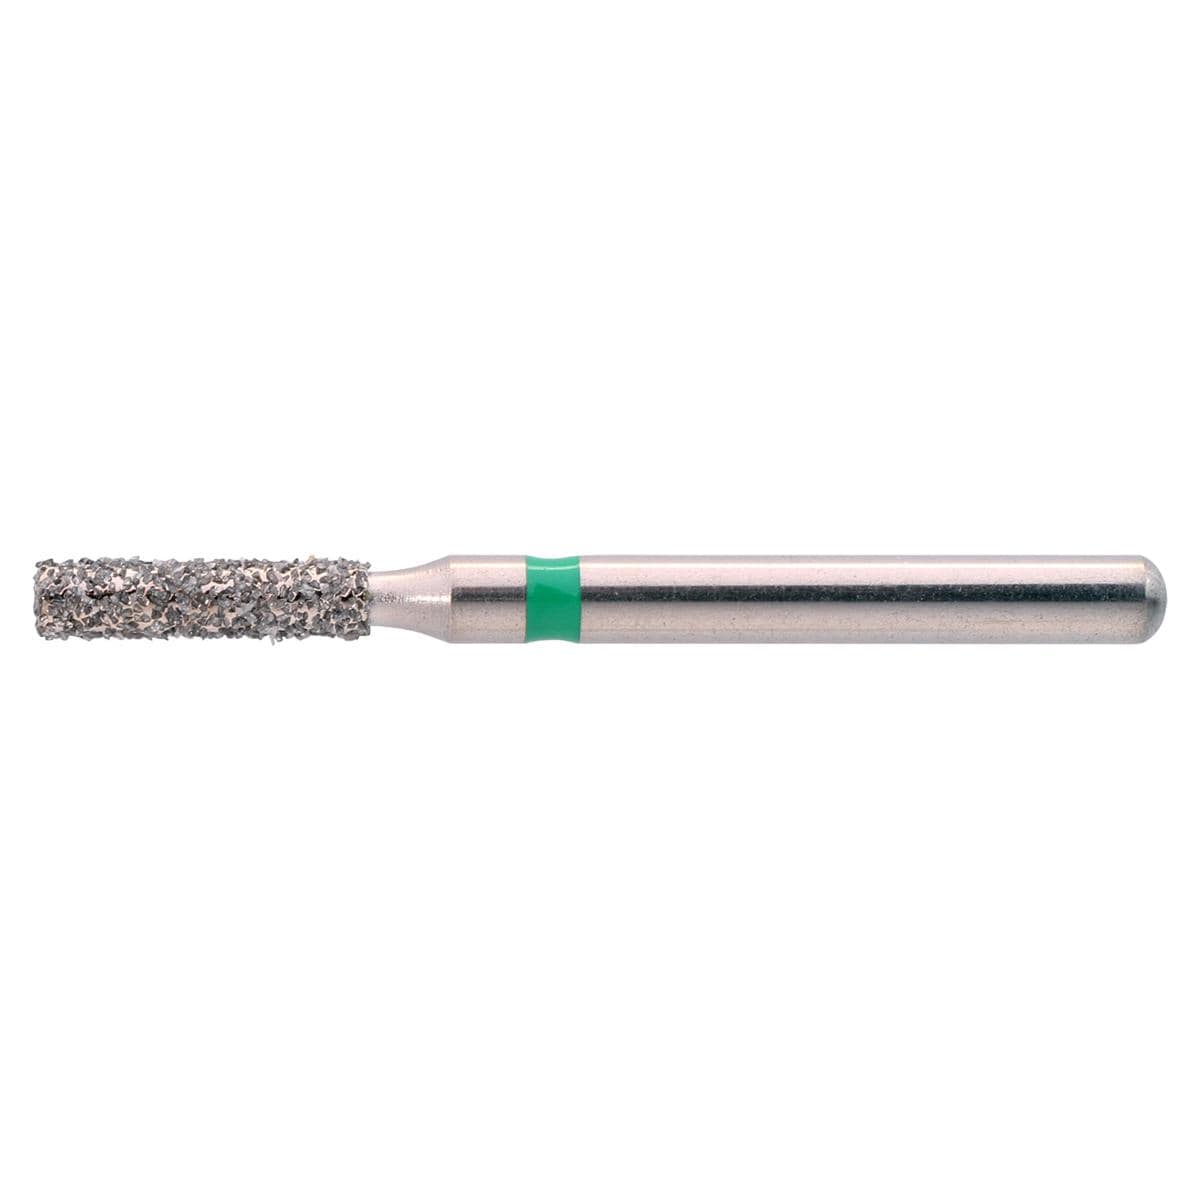 NeoDiamond FG, Form 110, Zylinder flach - ISO 016, grob (grün), Packung 10 Stück